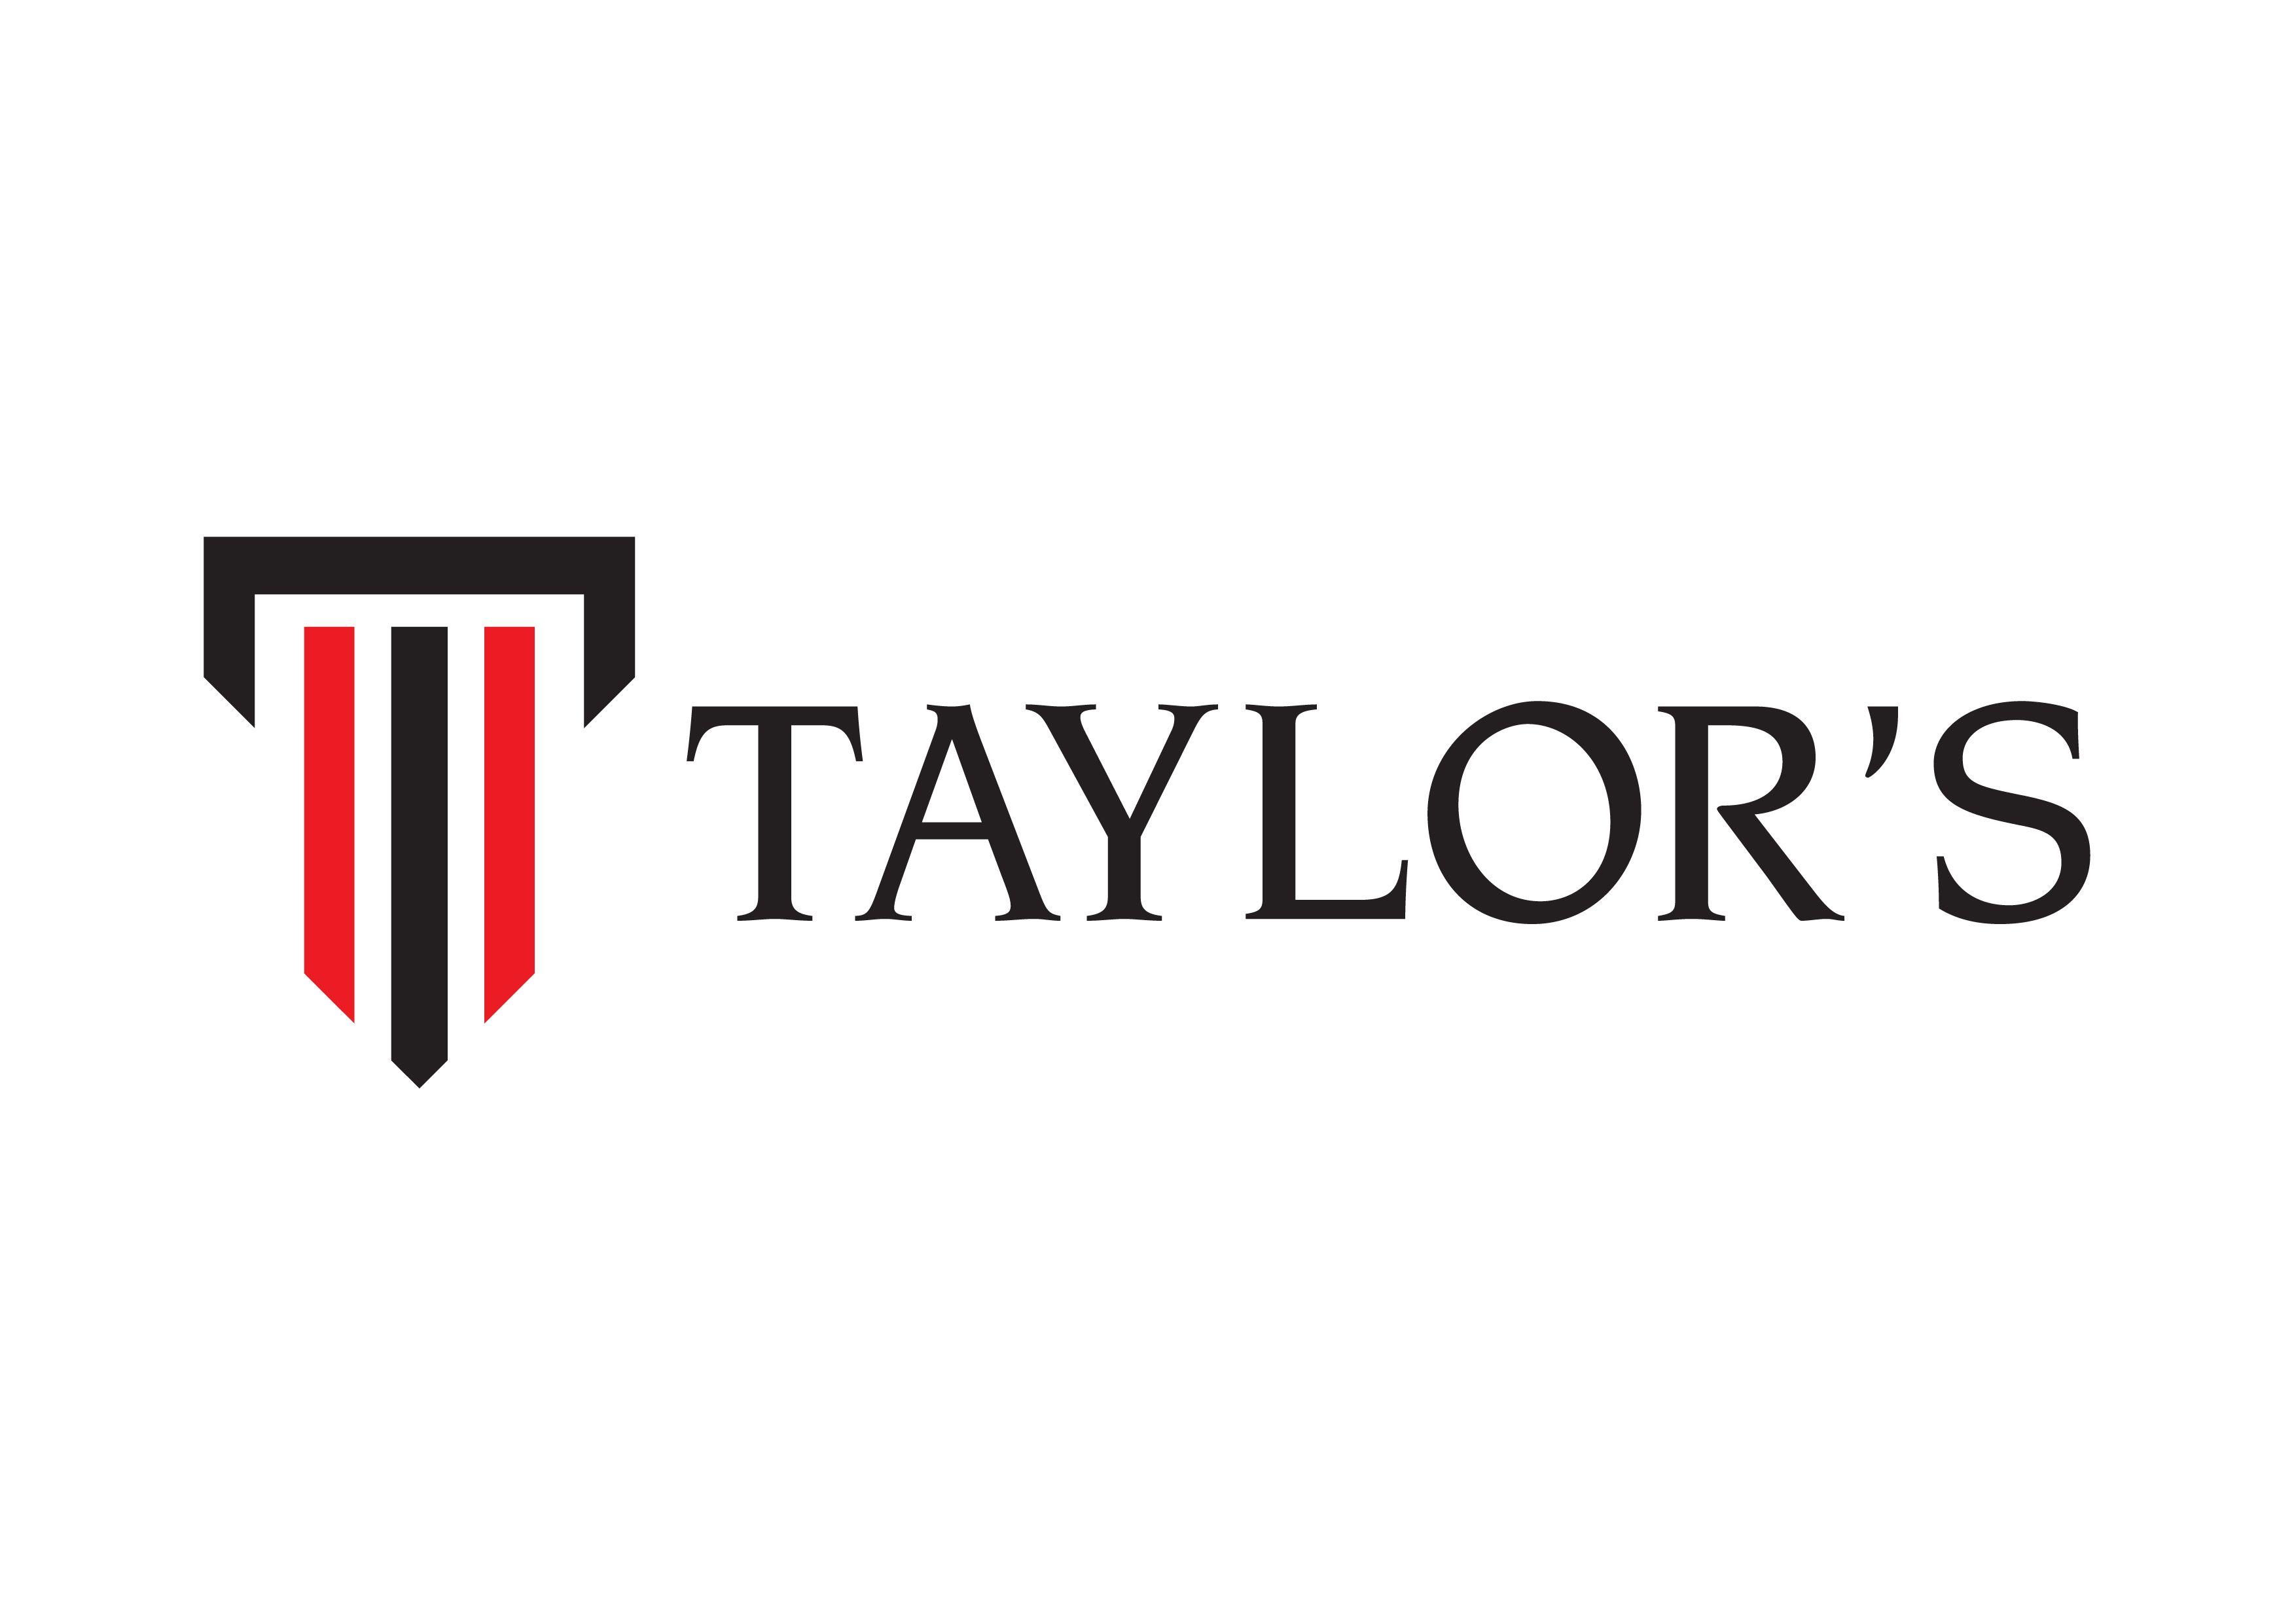 Taylor Logo - Logos | Taylor's Student Development